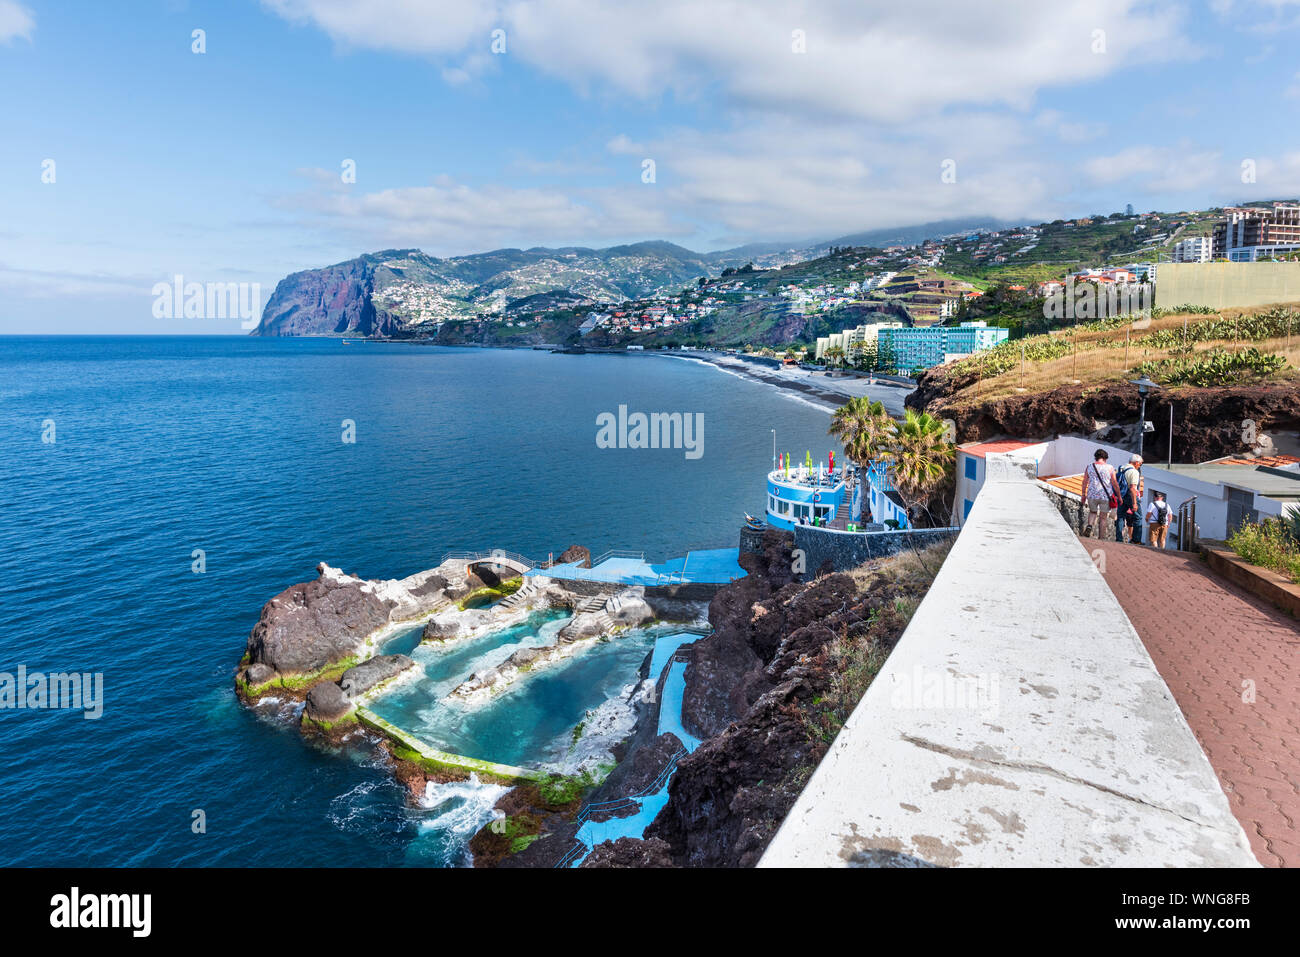 Promenade funchal to camara de lobos hi-res stock photography and images -  Alamy